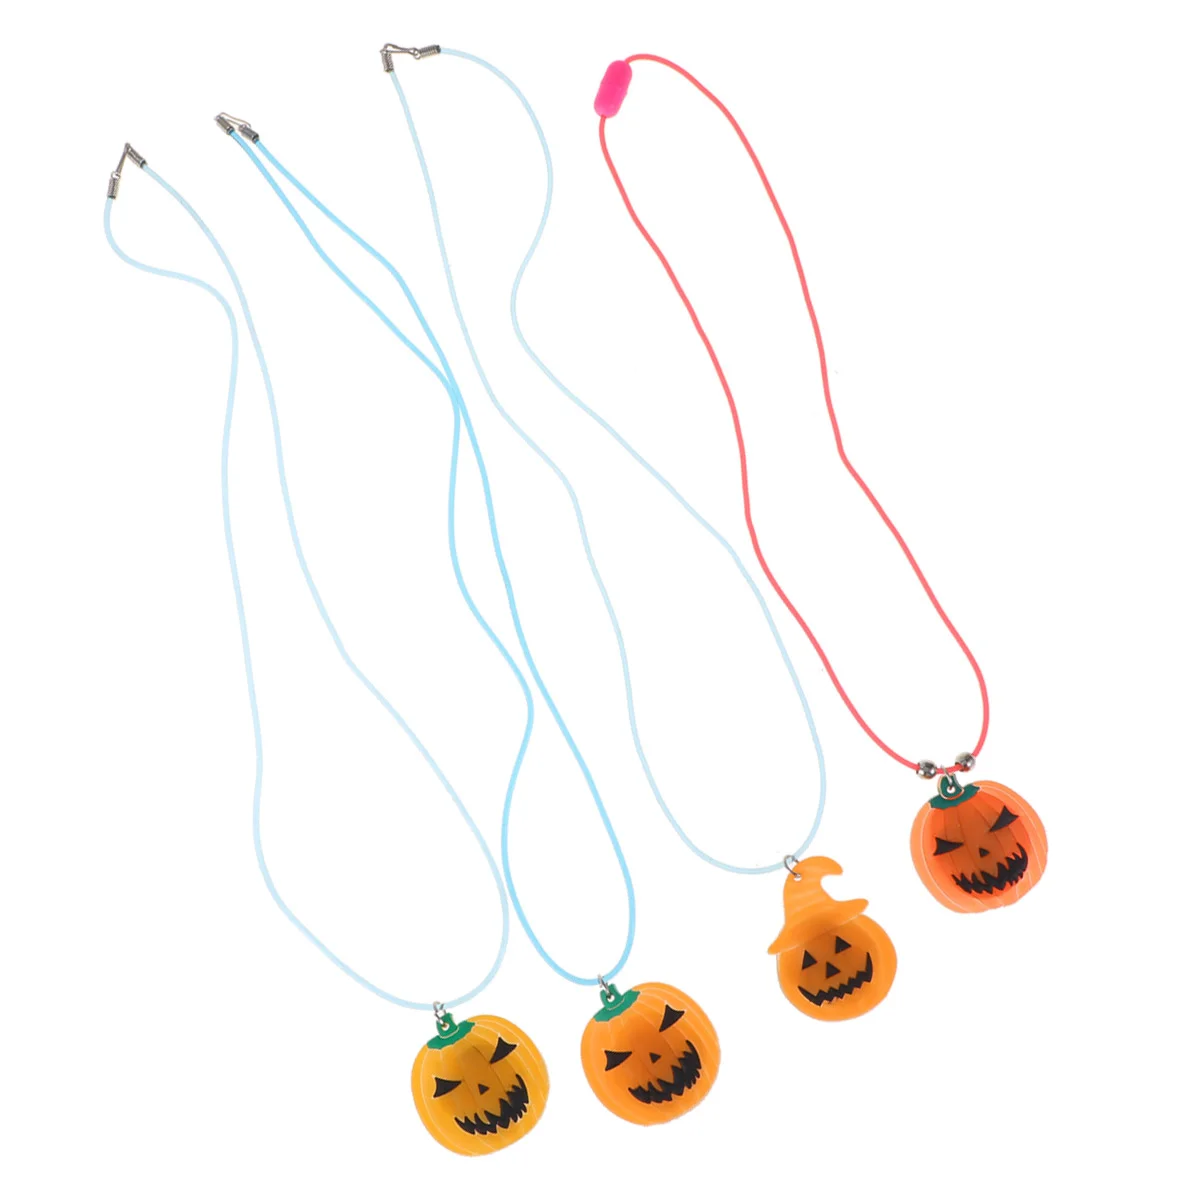 

4 Pendant Necklace Glowing Pumpkin Luminous Kids Costume Props Birthday Party Favors Bag Fillers Random